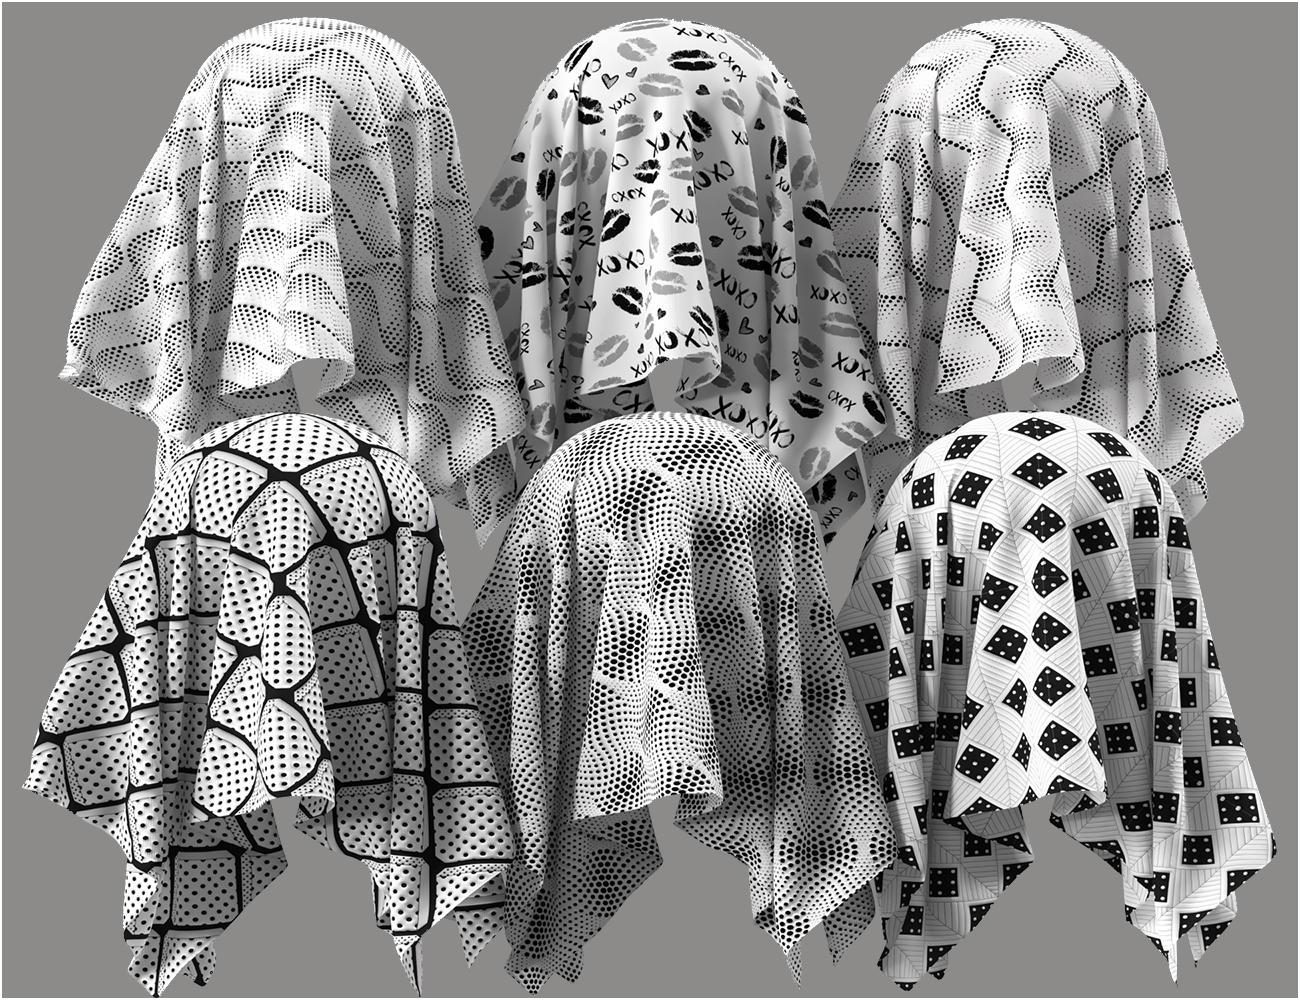 Monochrome Iray Shaders 01 - Merchant Resource by: OziChickhotlilme74, 3D Models by Daz 3D